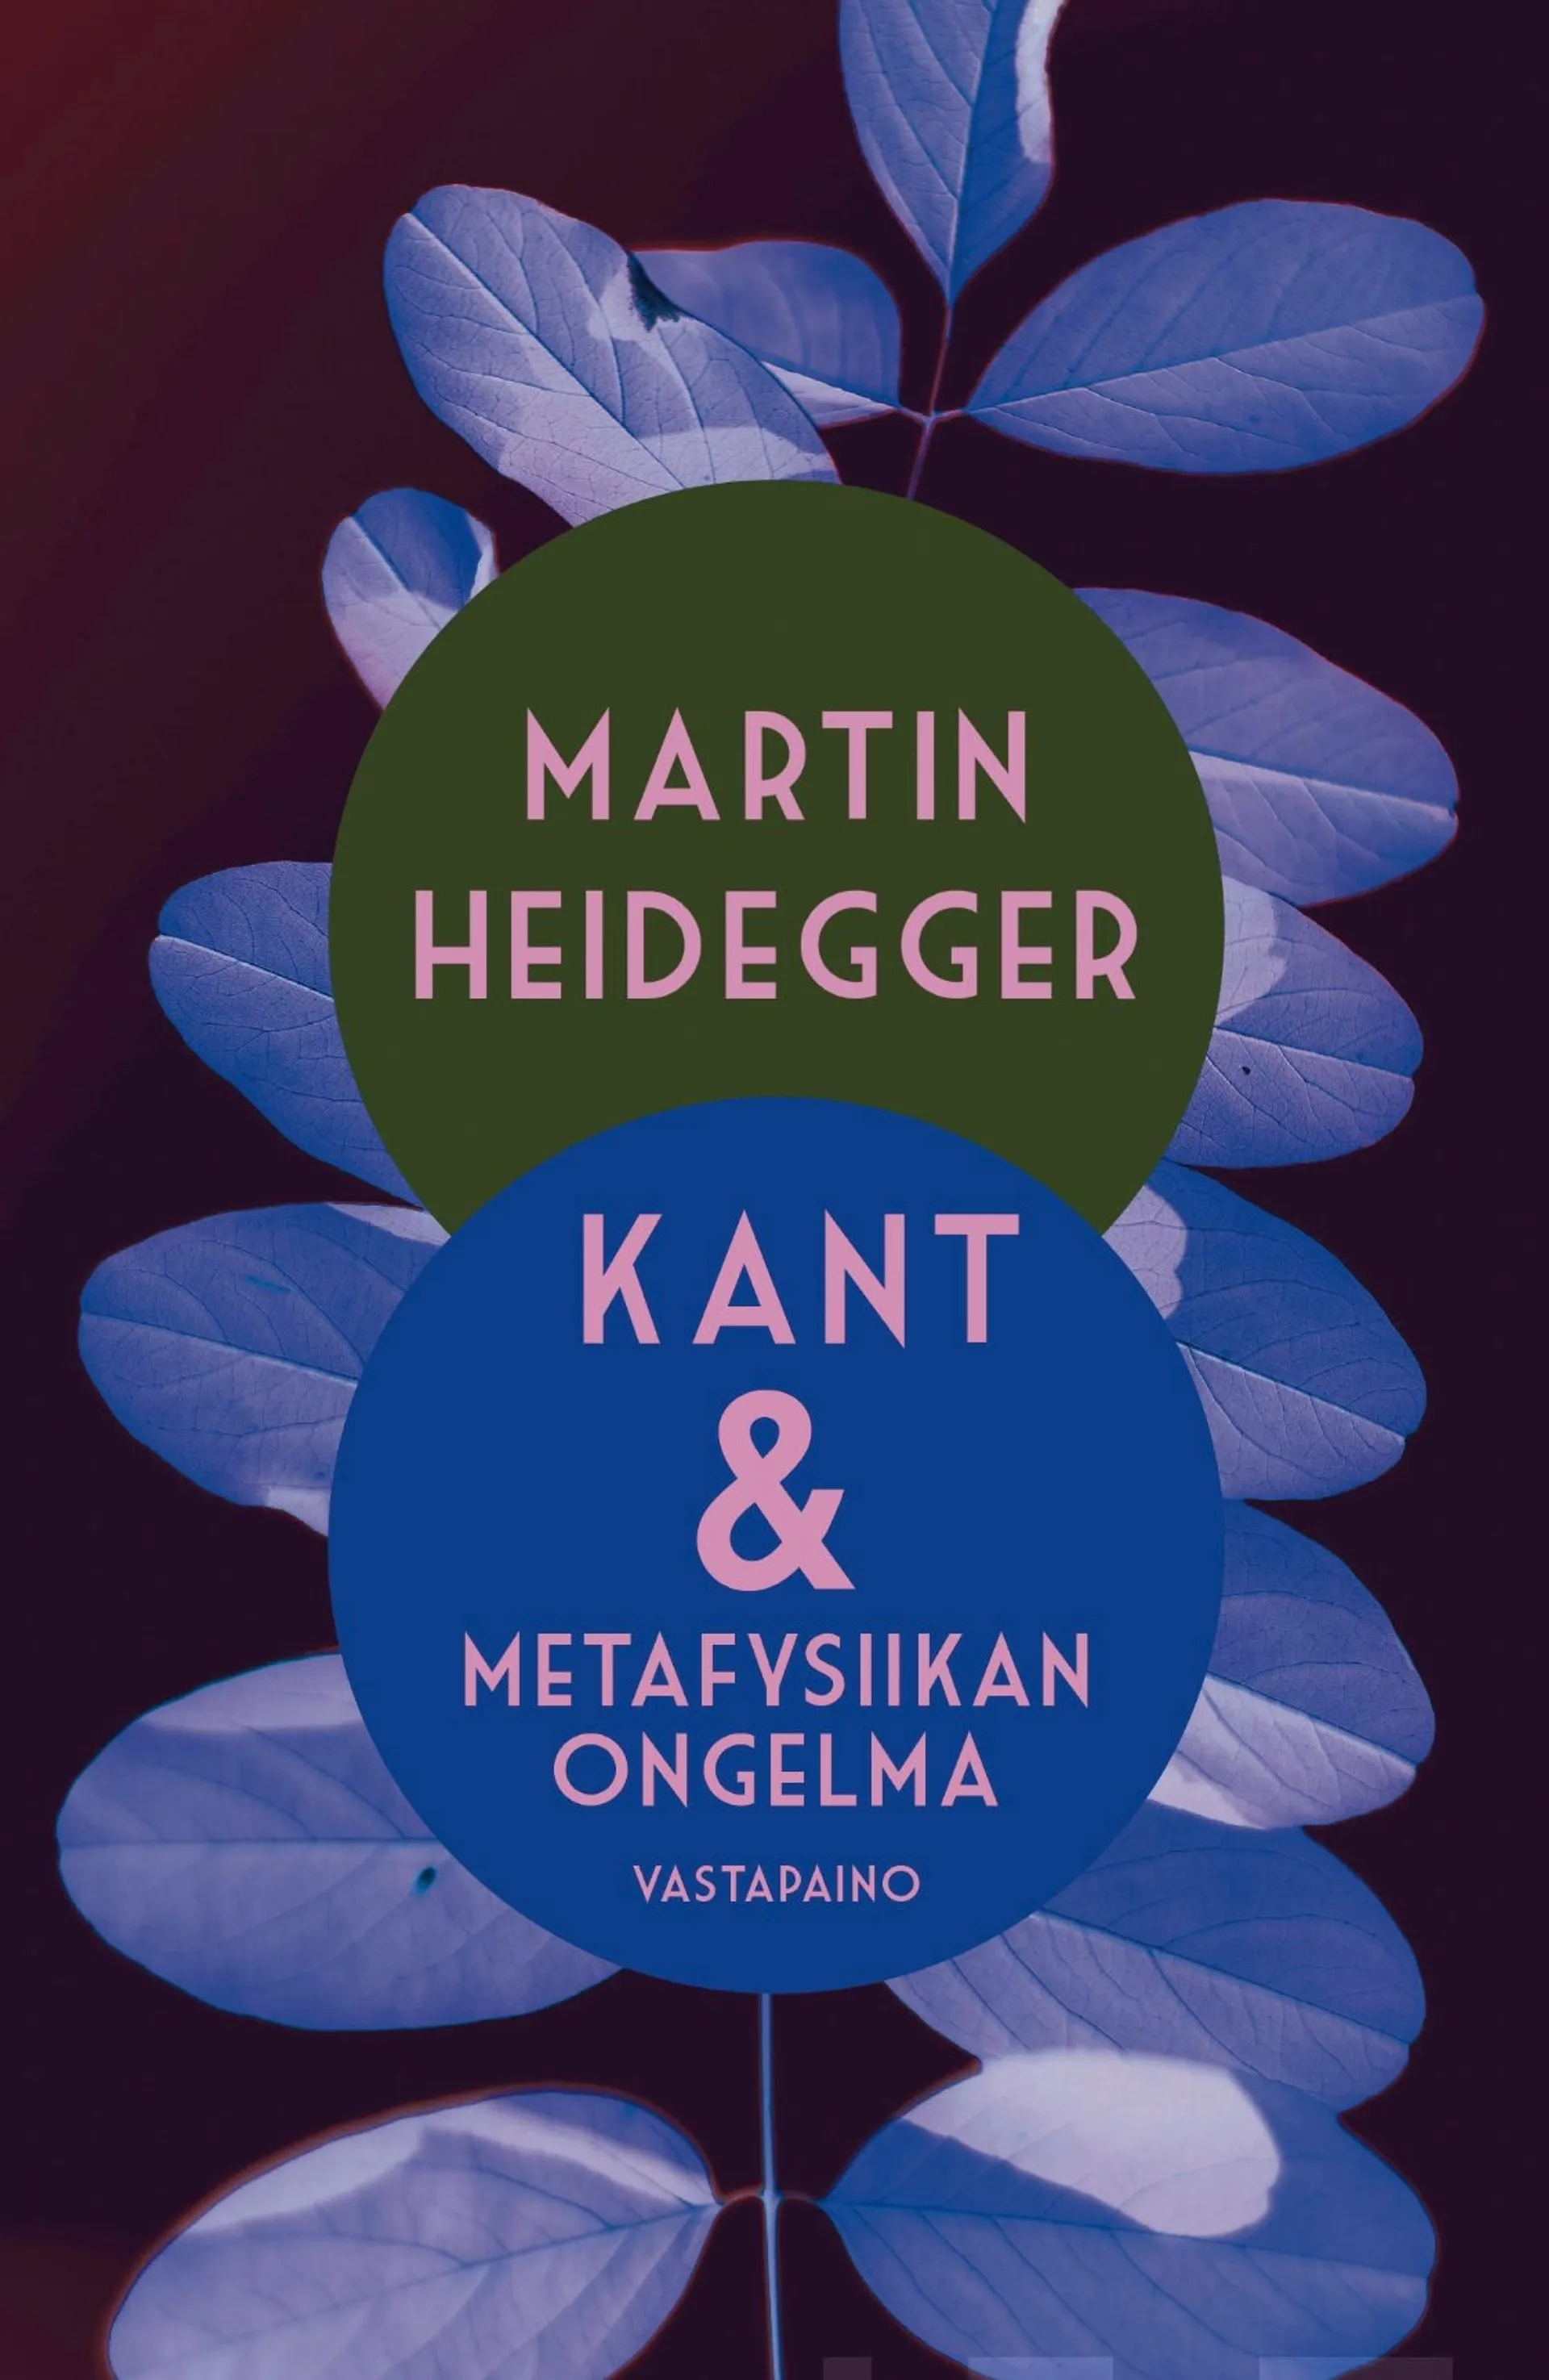 Heidegger, Kant & metafysiikan ongelma